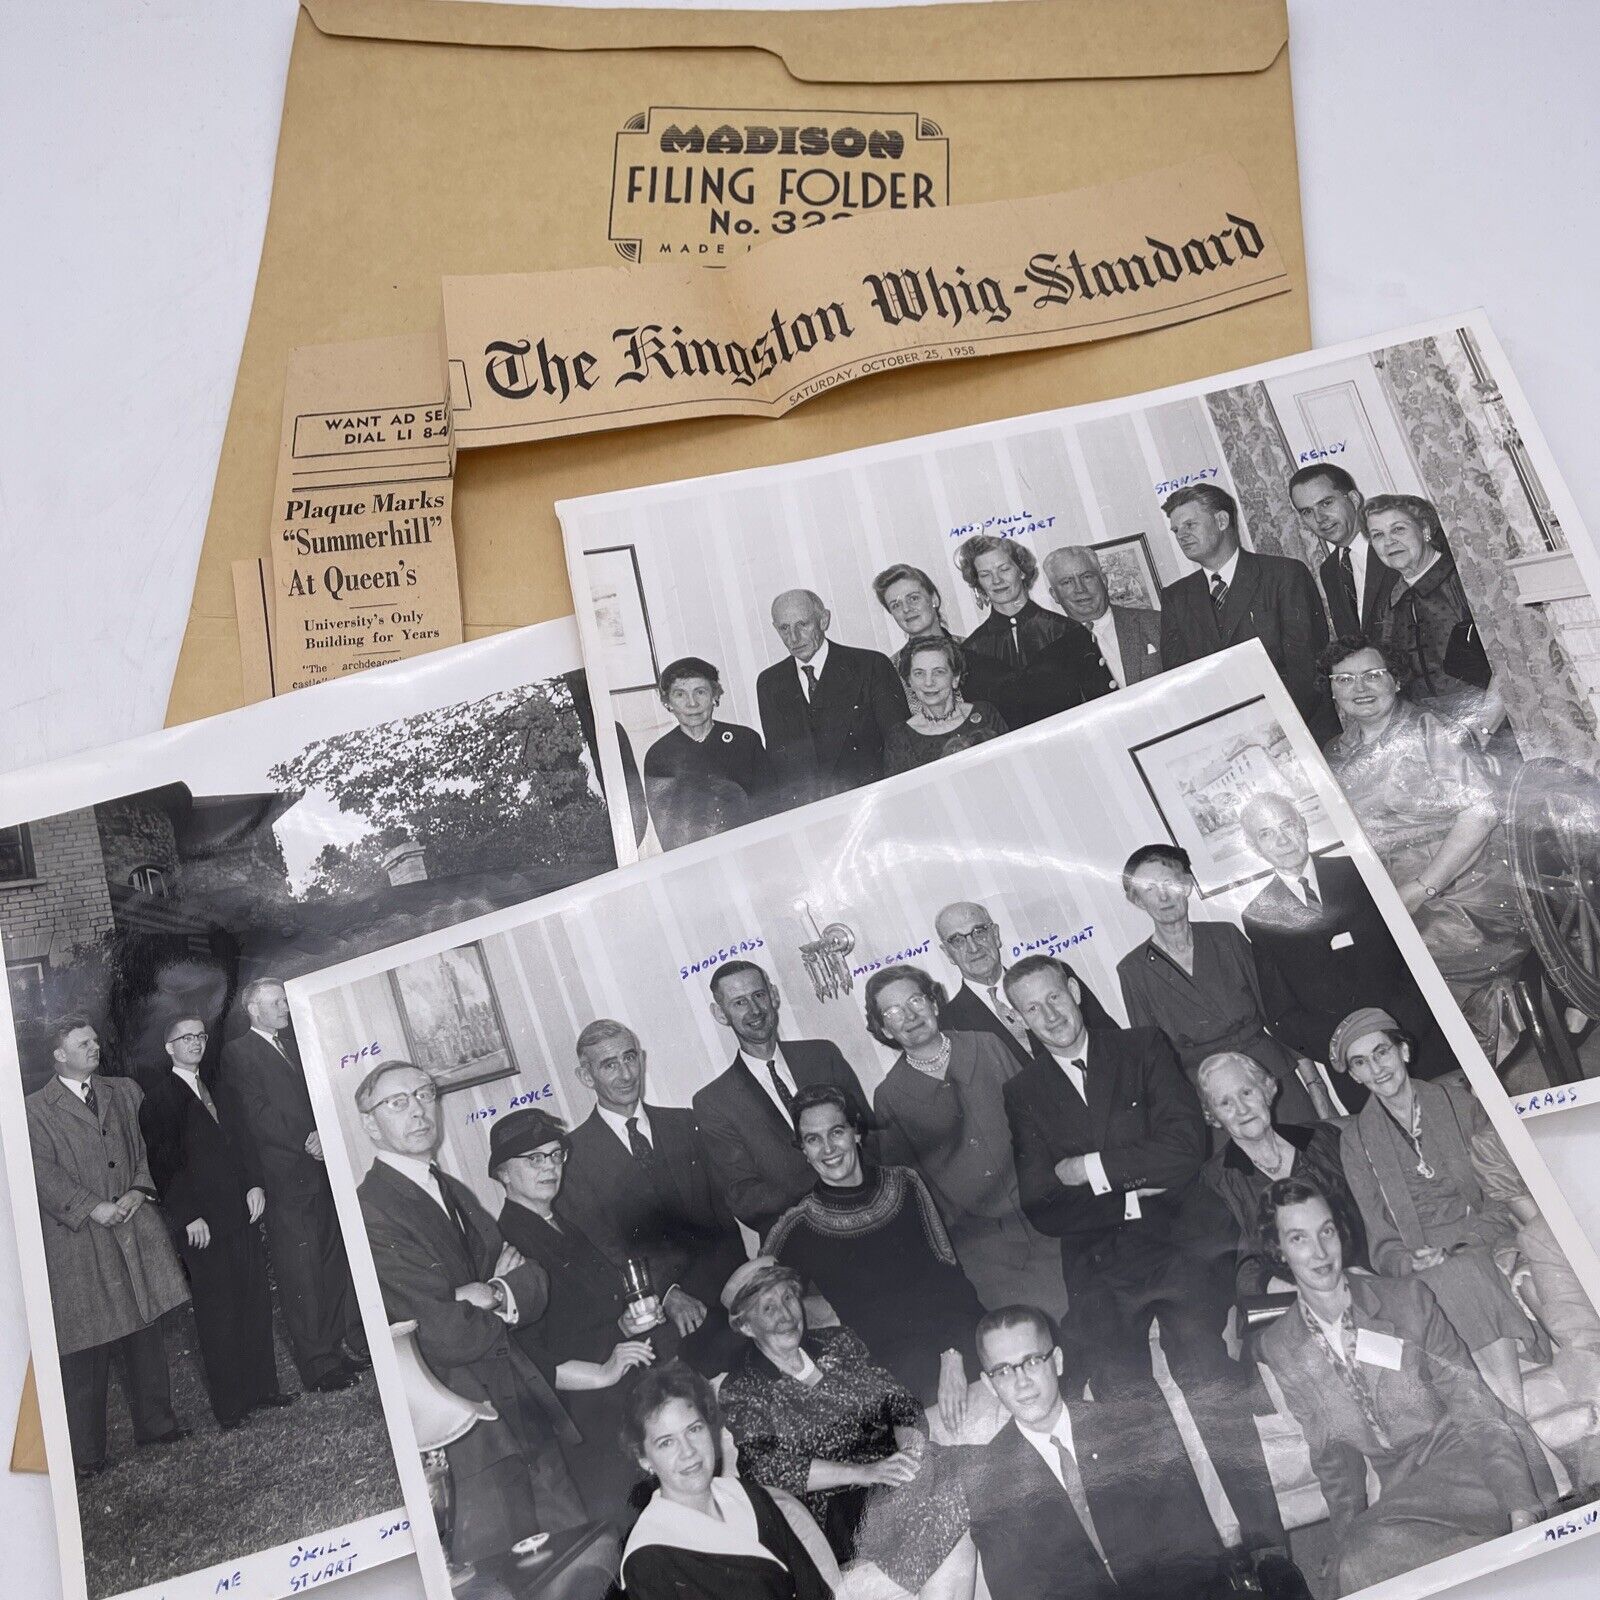 Lot of 3 1958 Press Photo Queen's University Sumnmerhill Dedication w/article